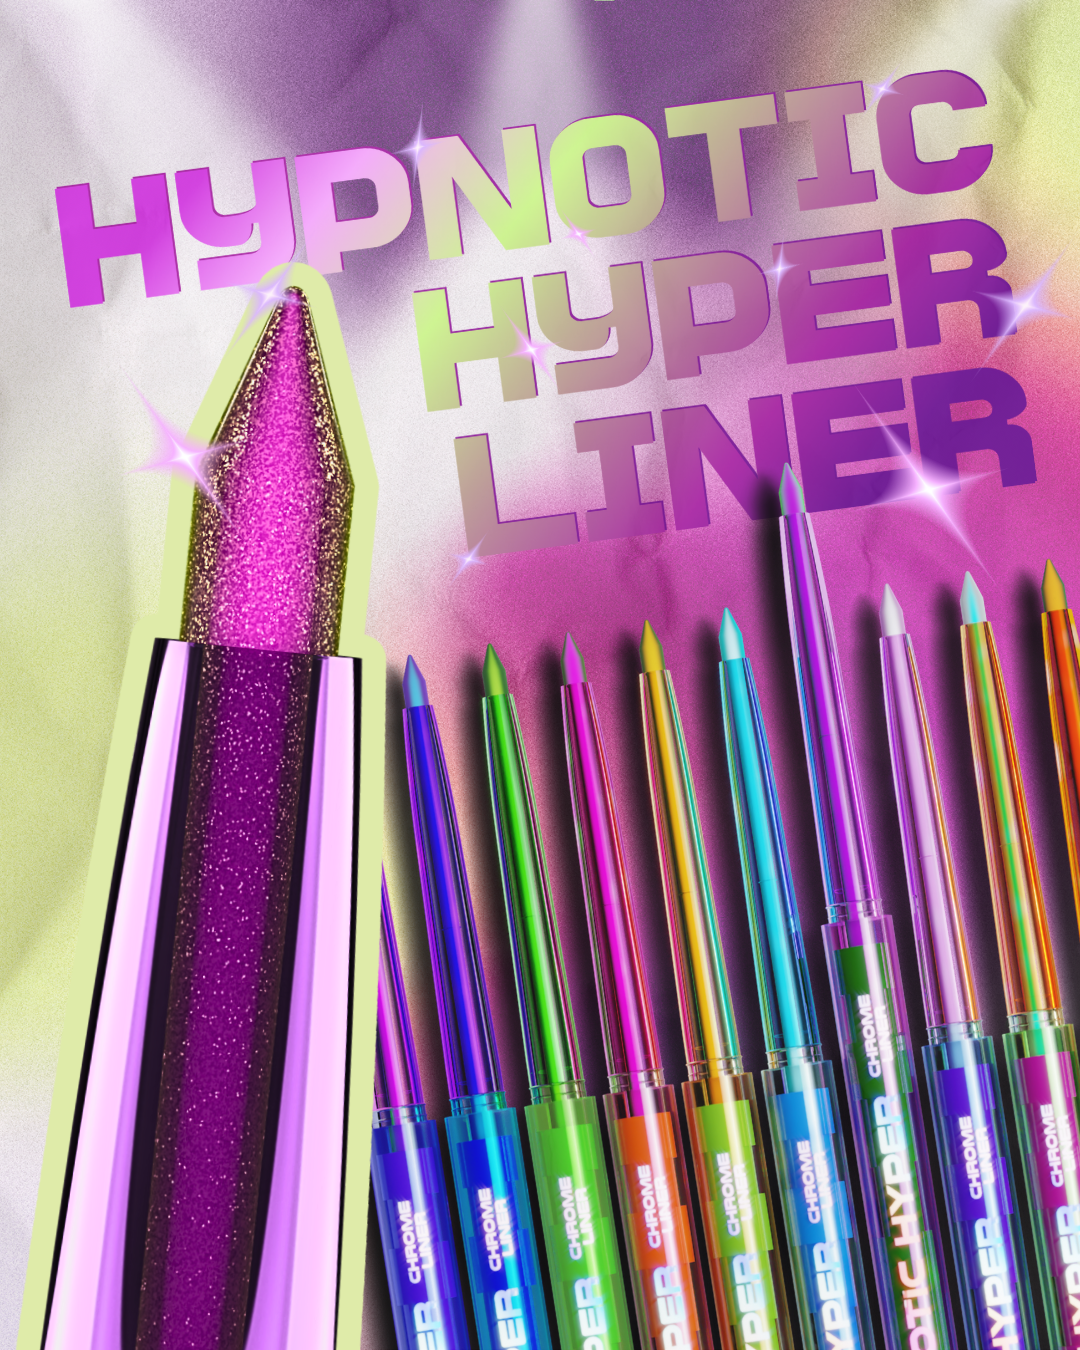 Hypnotic Hyper Chrome Liner